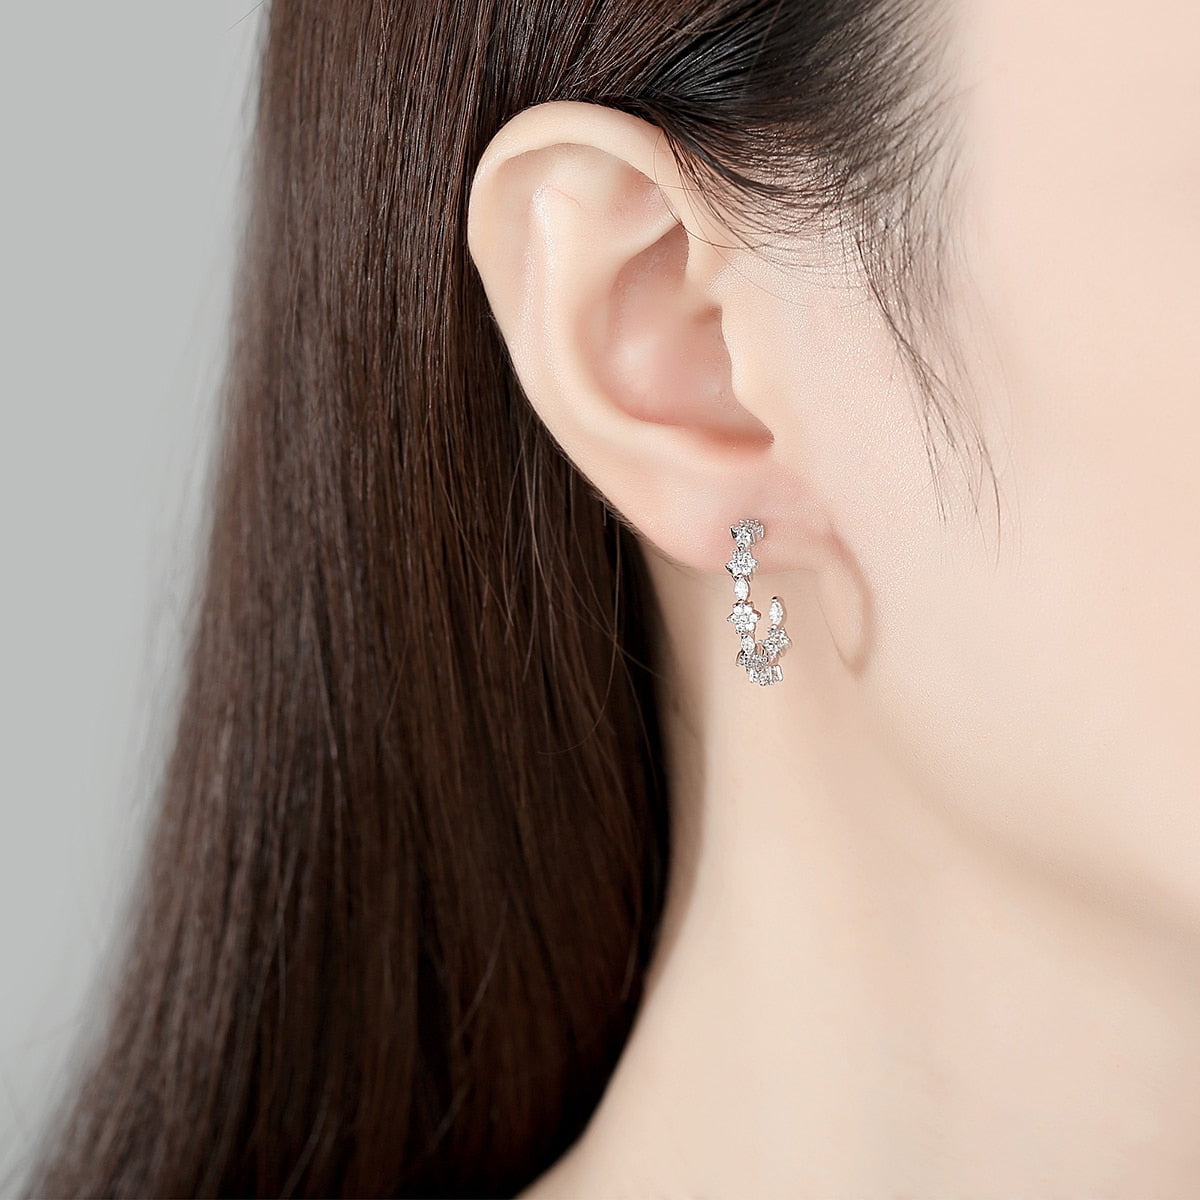 Kennebunkport Earrings - ANN VOYAGE